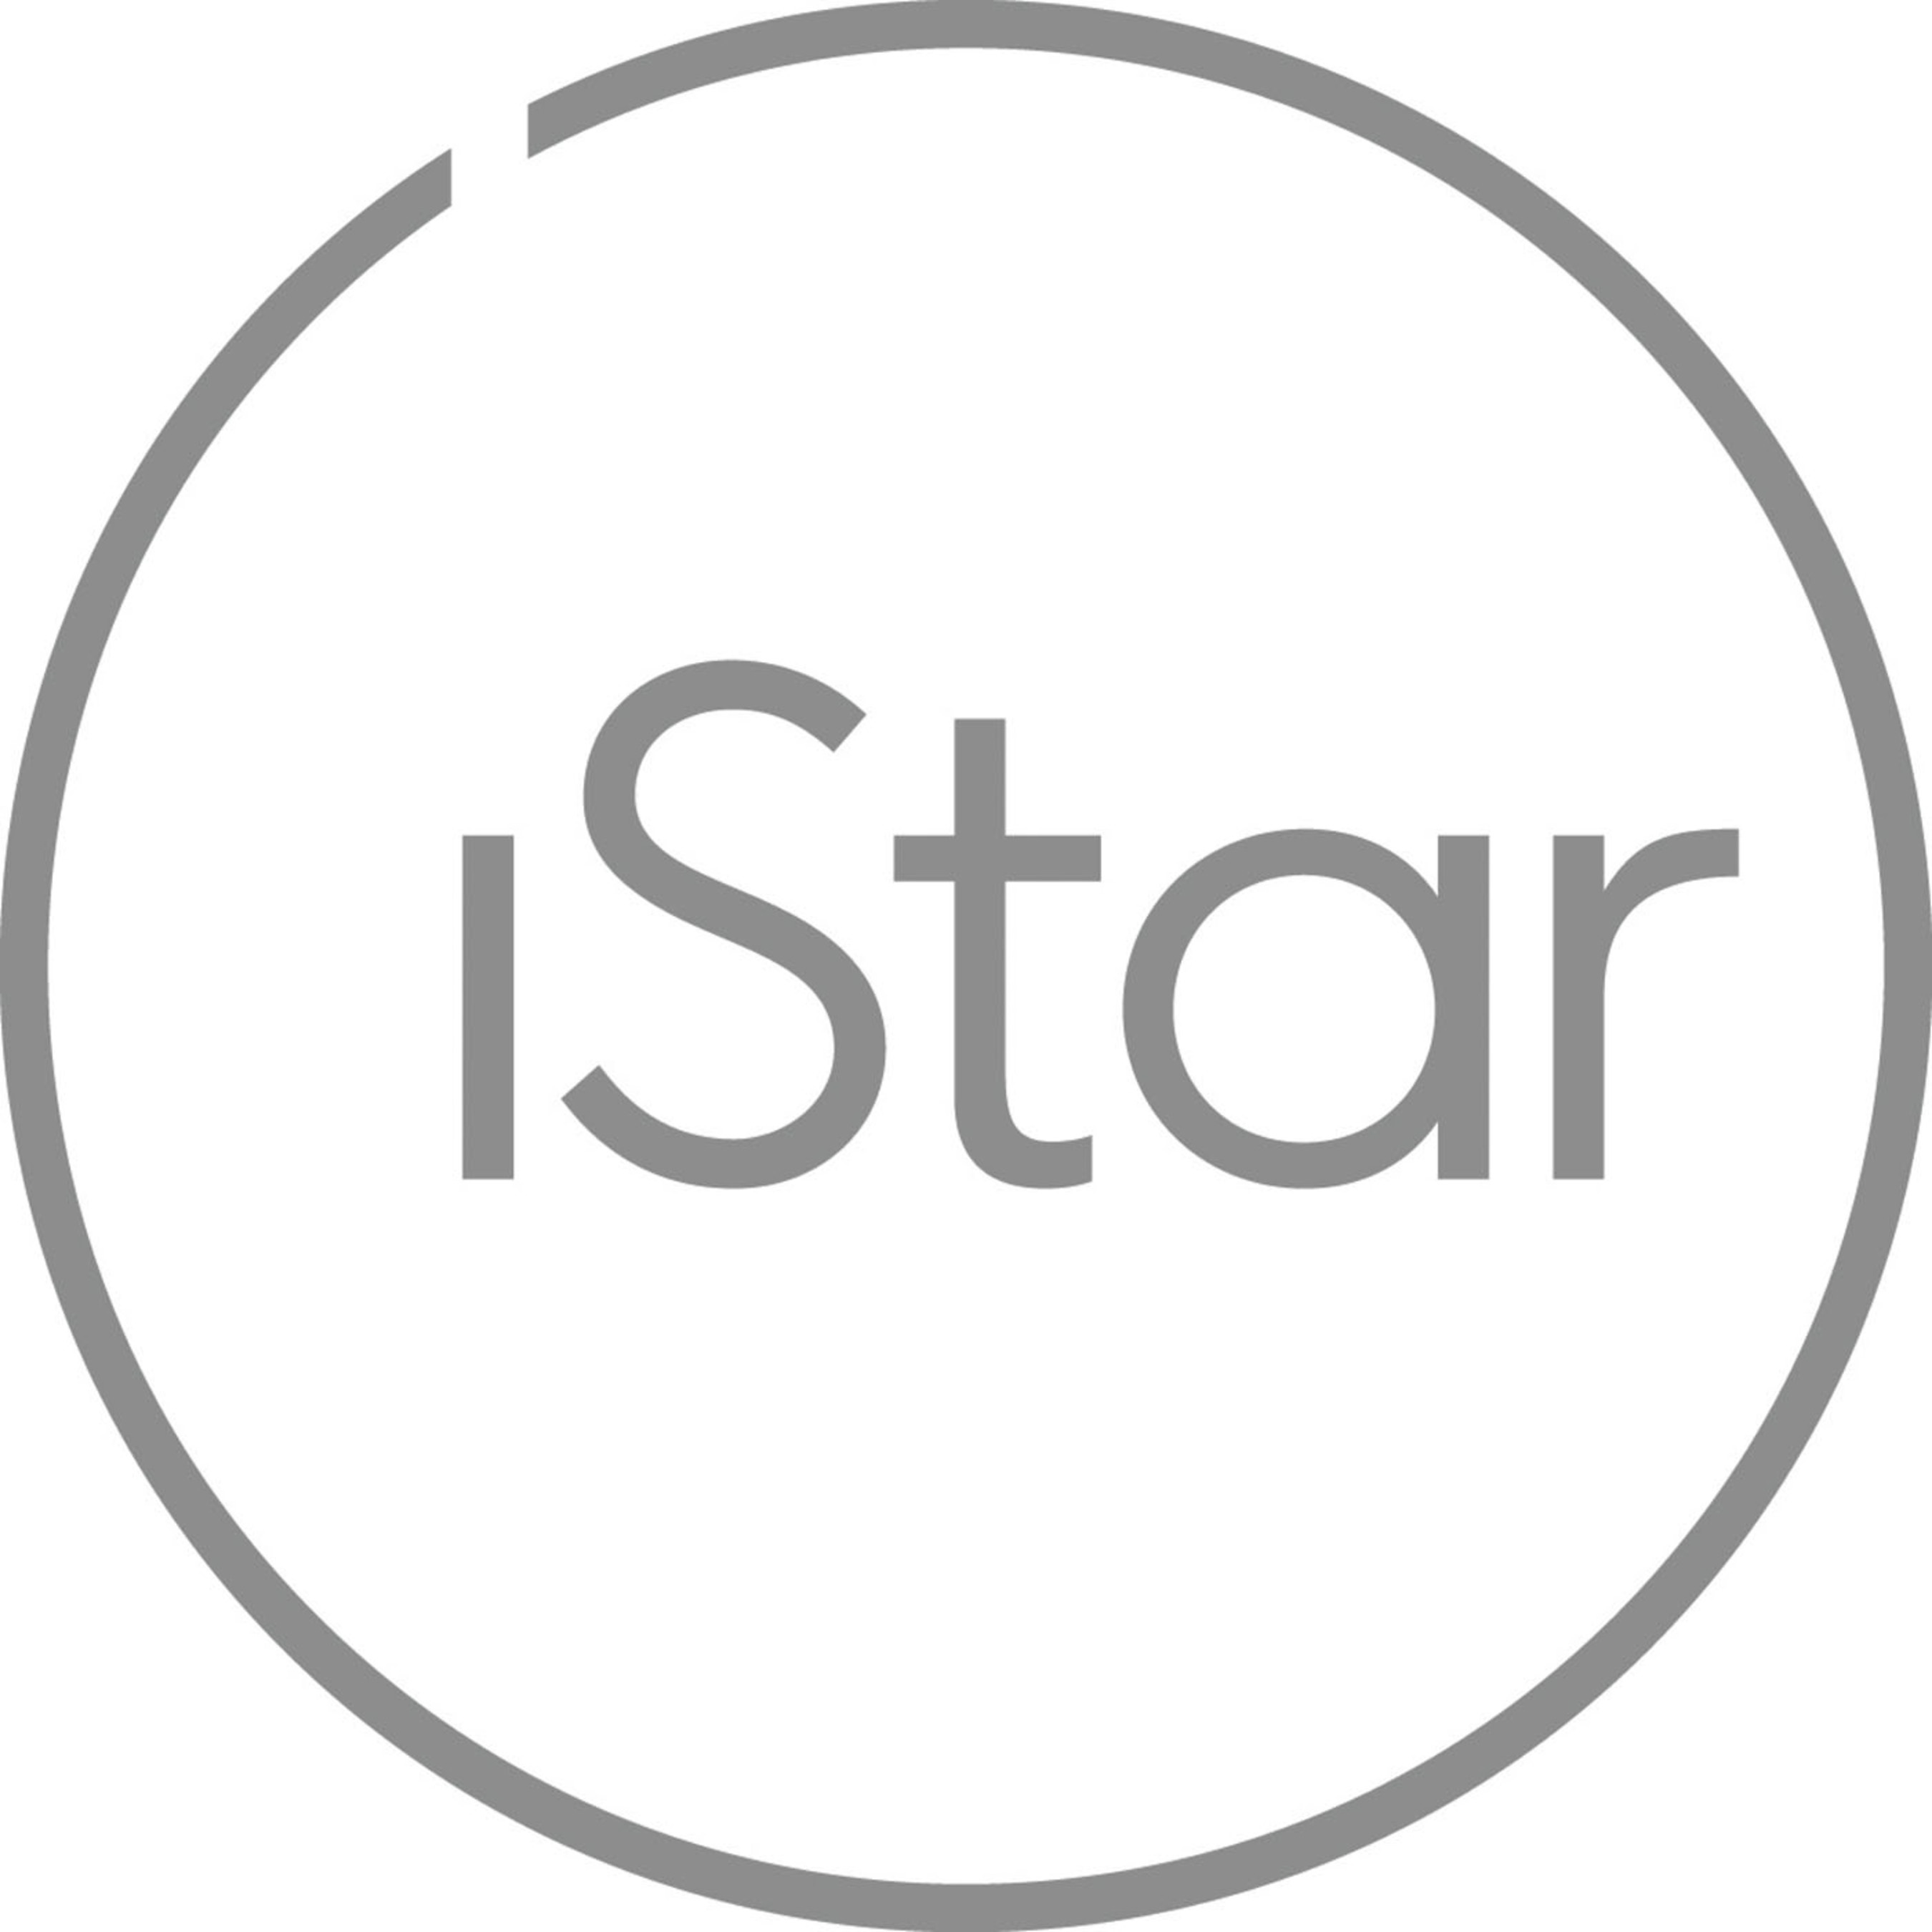 Istar (net Lease Business)